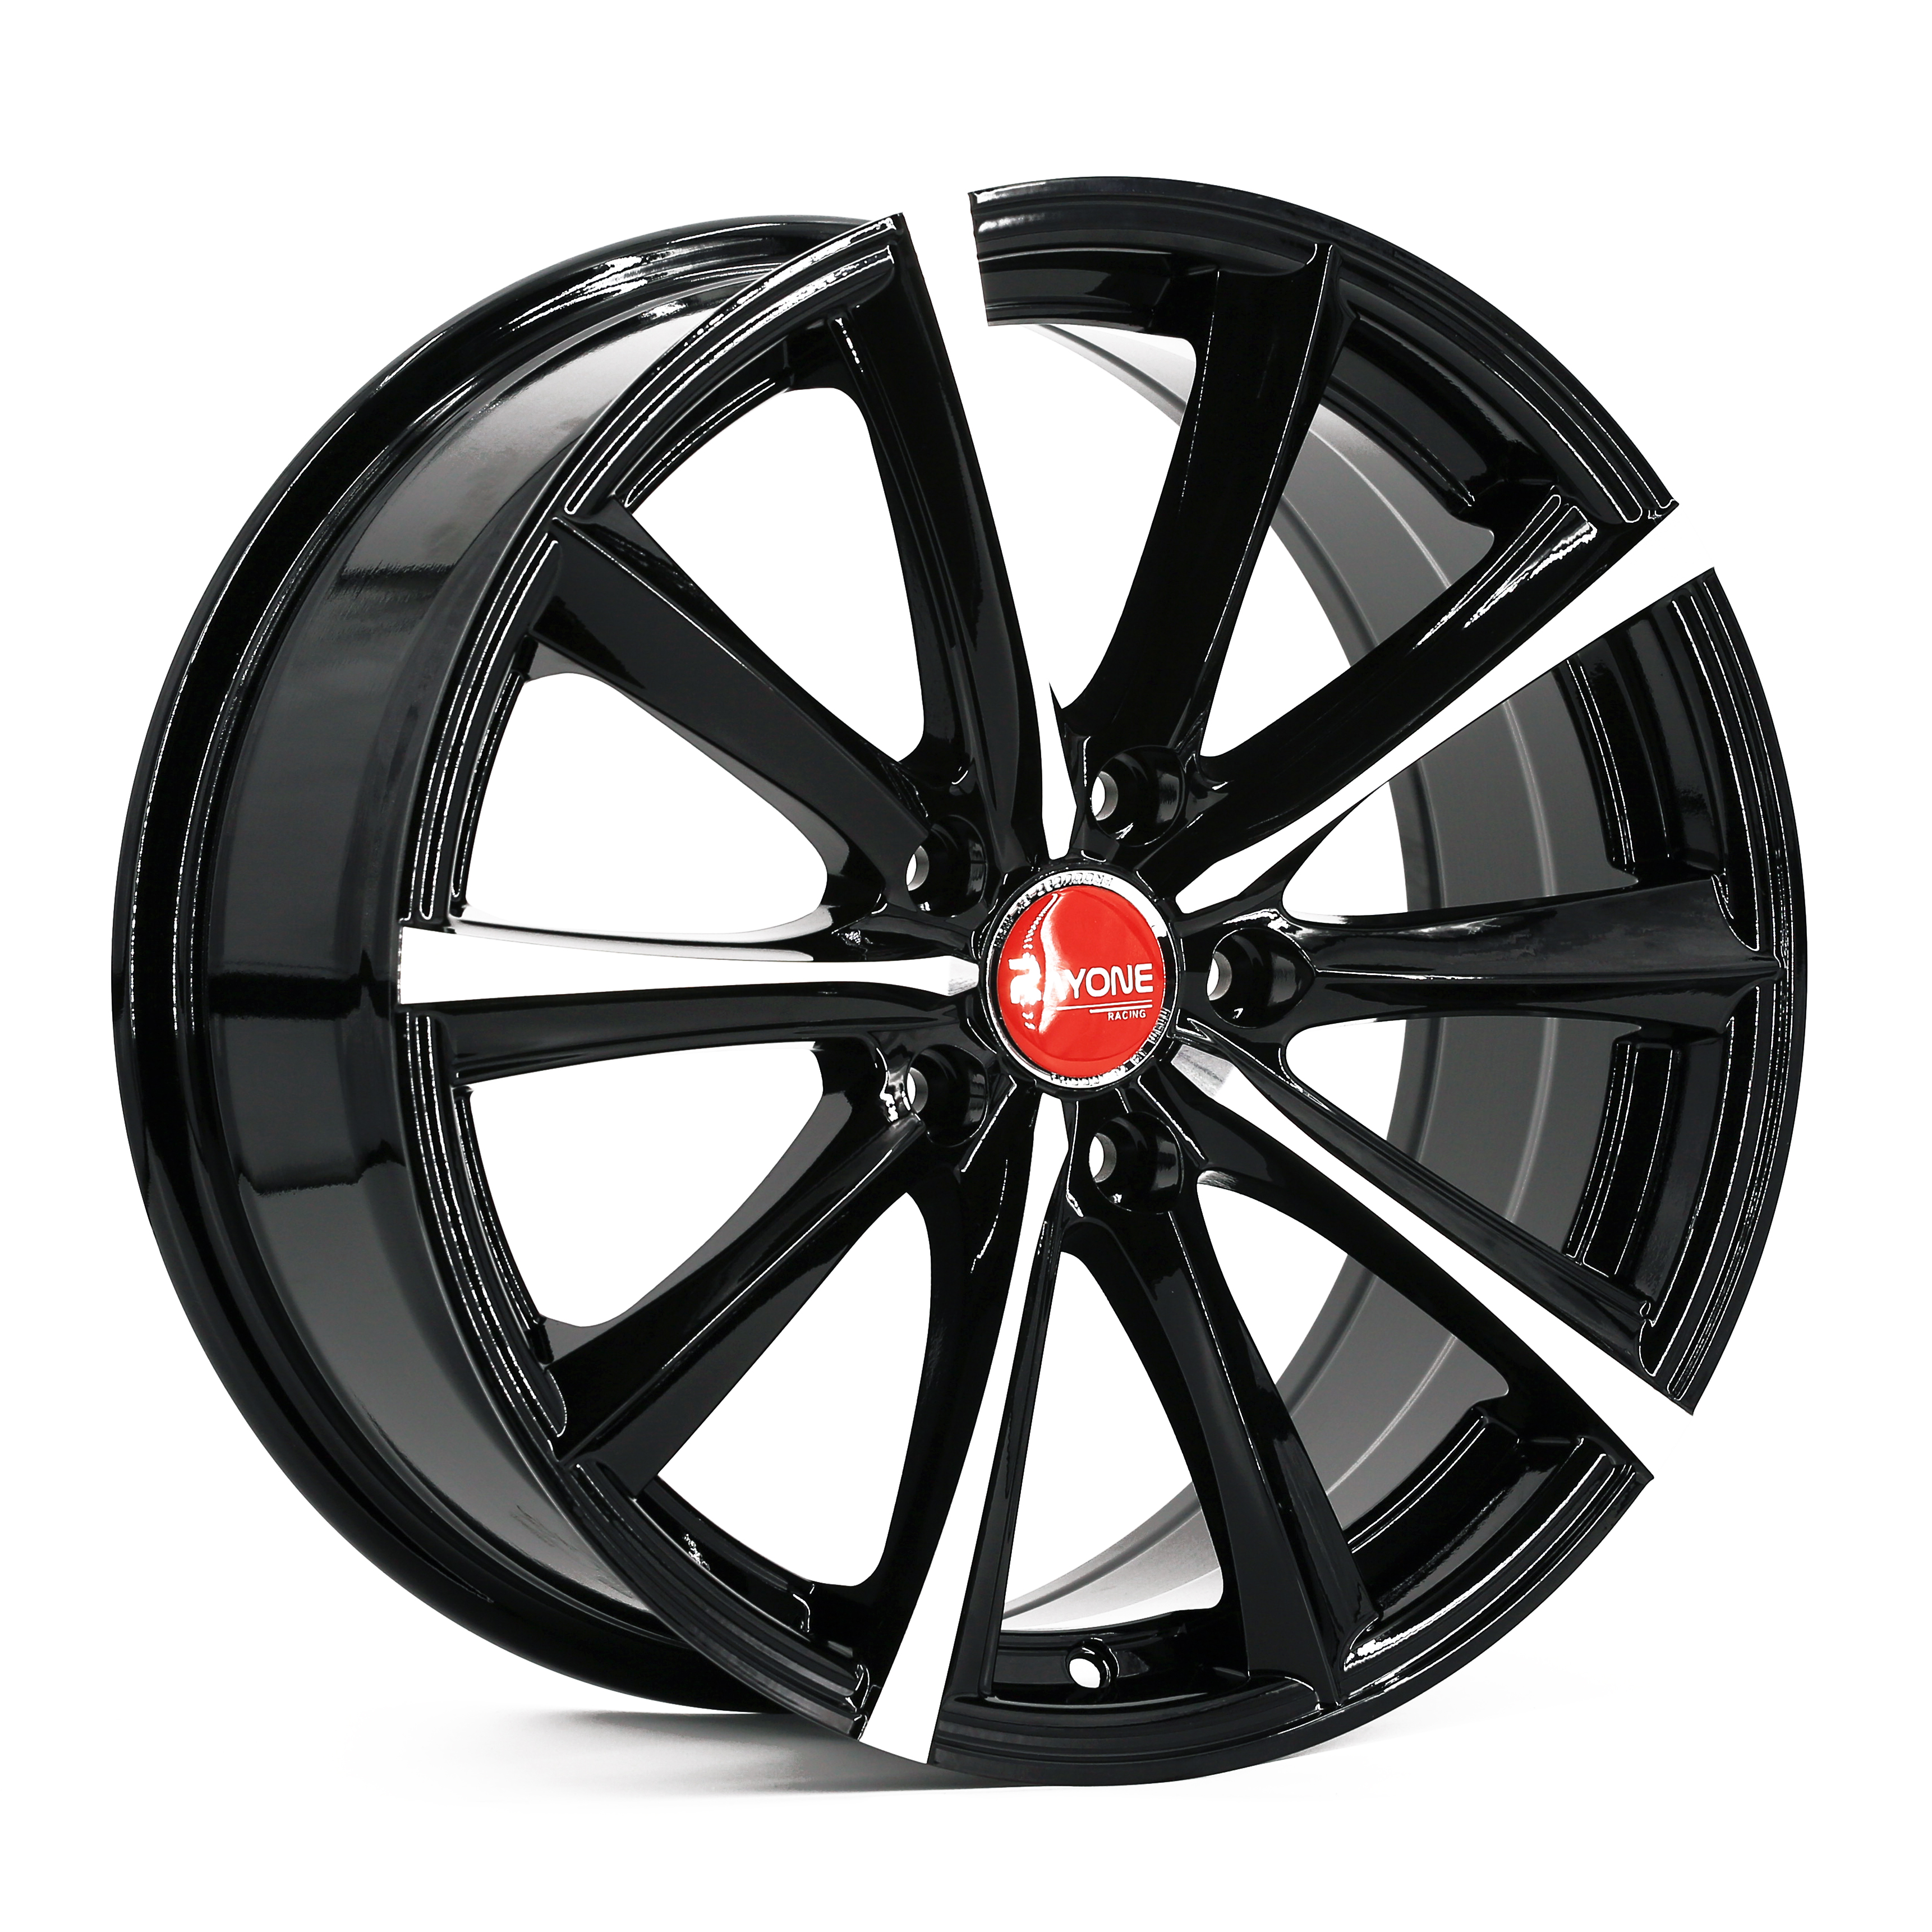 15/16/17 Inch Concave Aluminum Wheel Rim For Japan Cars